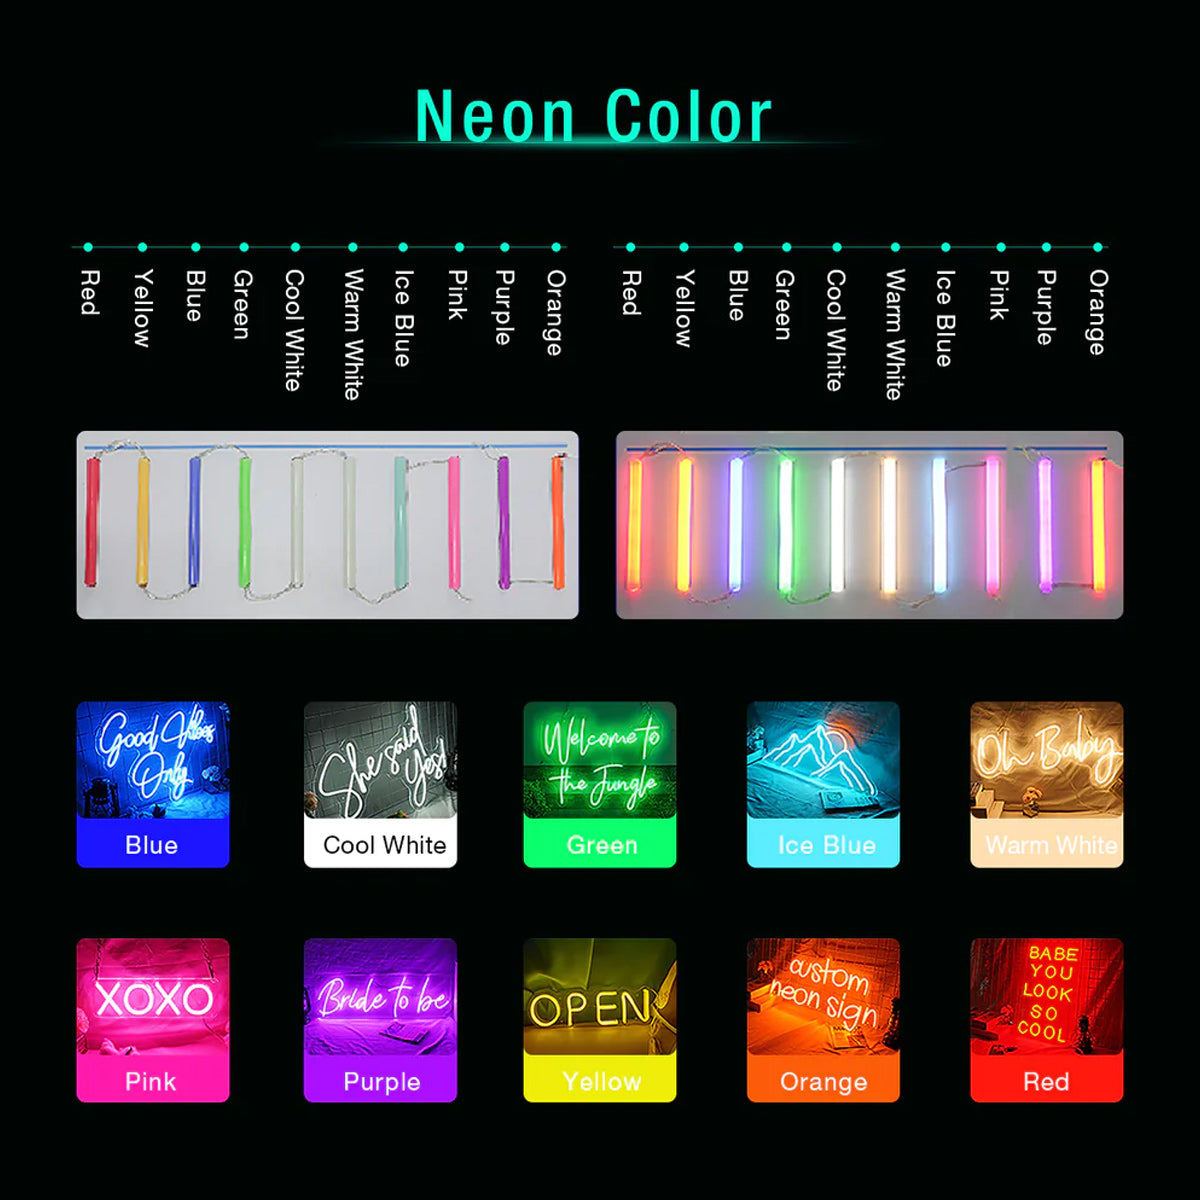 NEONIP-Personalized 100% Handmade Name Mirror Neon Light for Bedroom